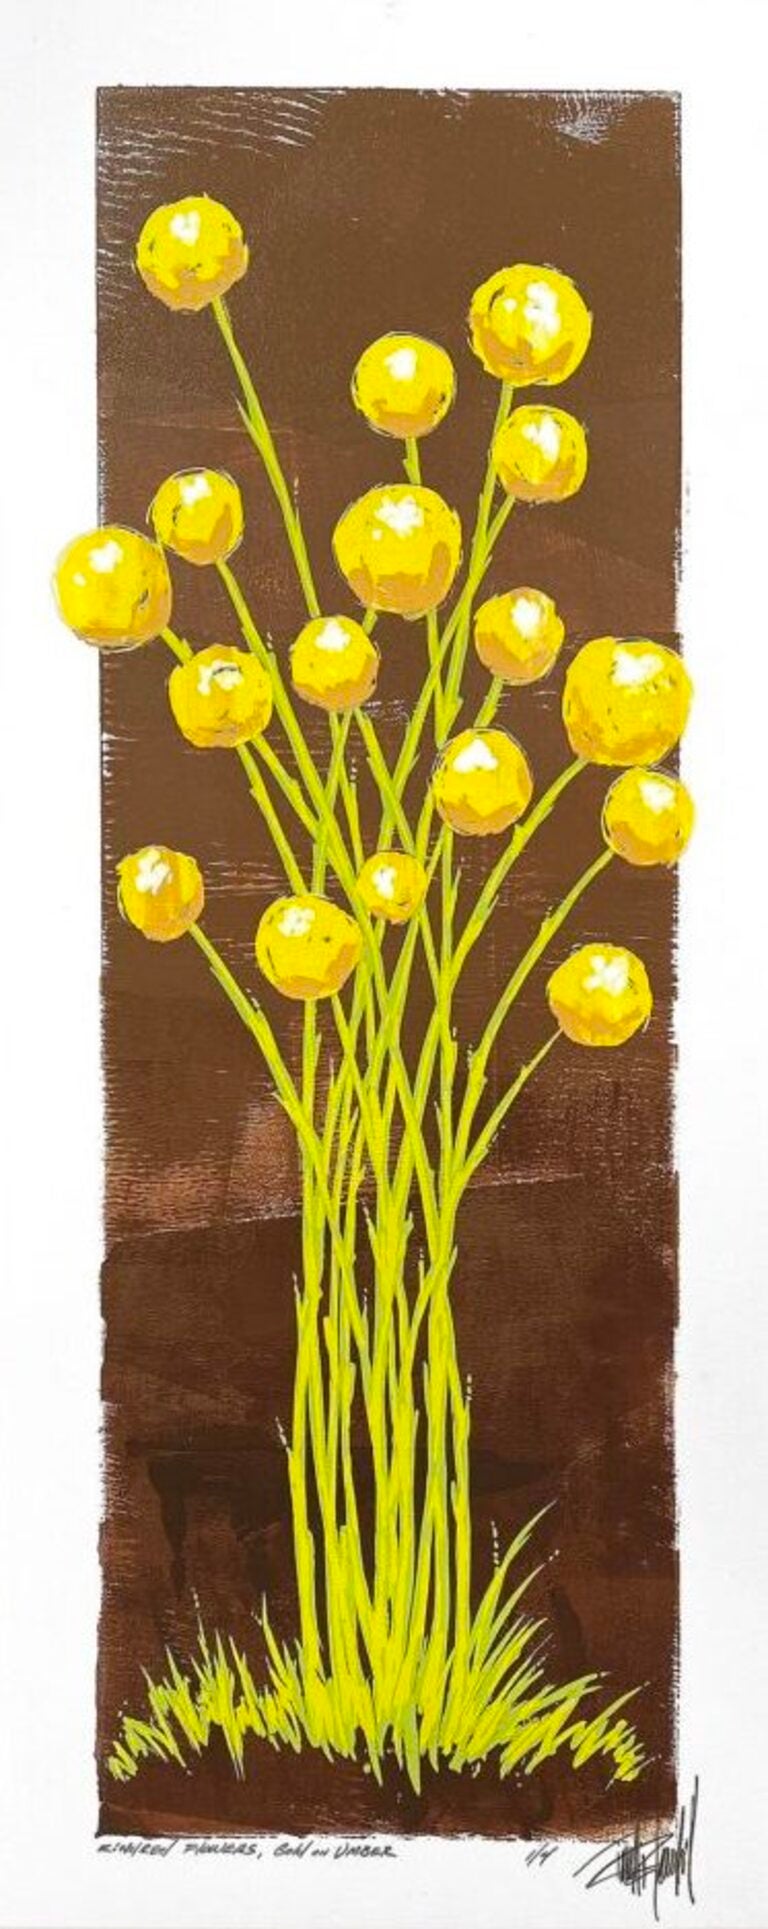 Terrell Thornhill  Landscape Print - Kindred Flowers, Gold on Umber (4/4)